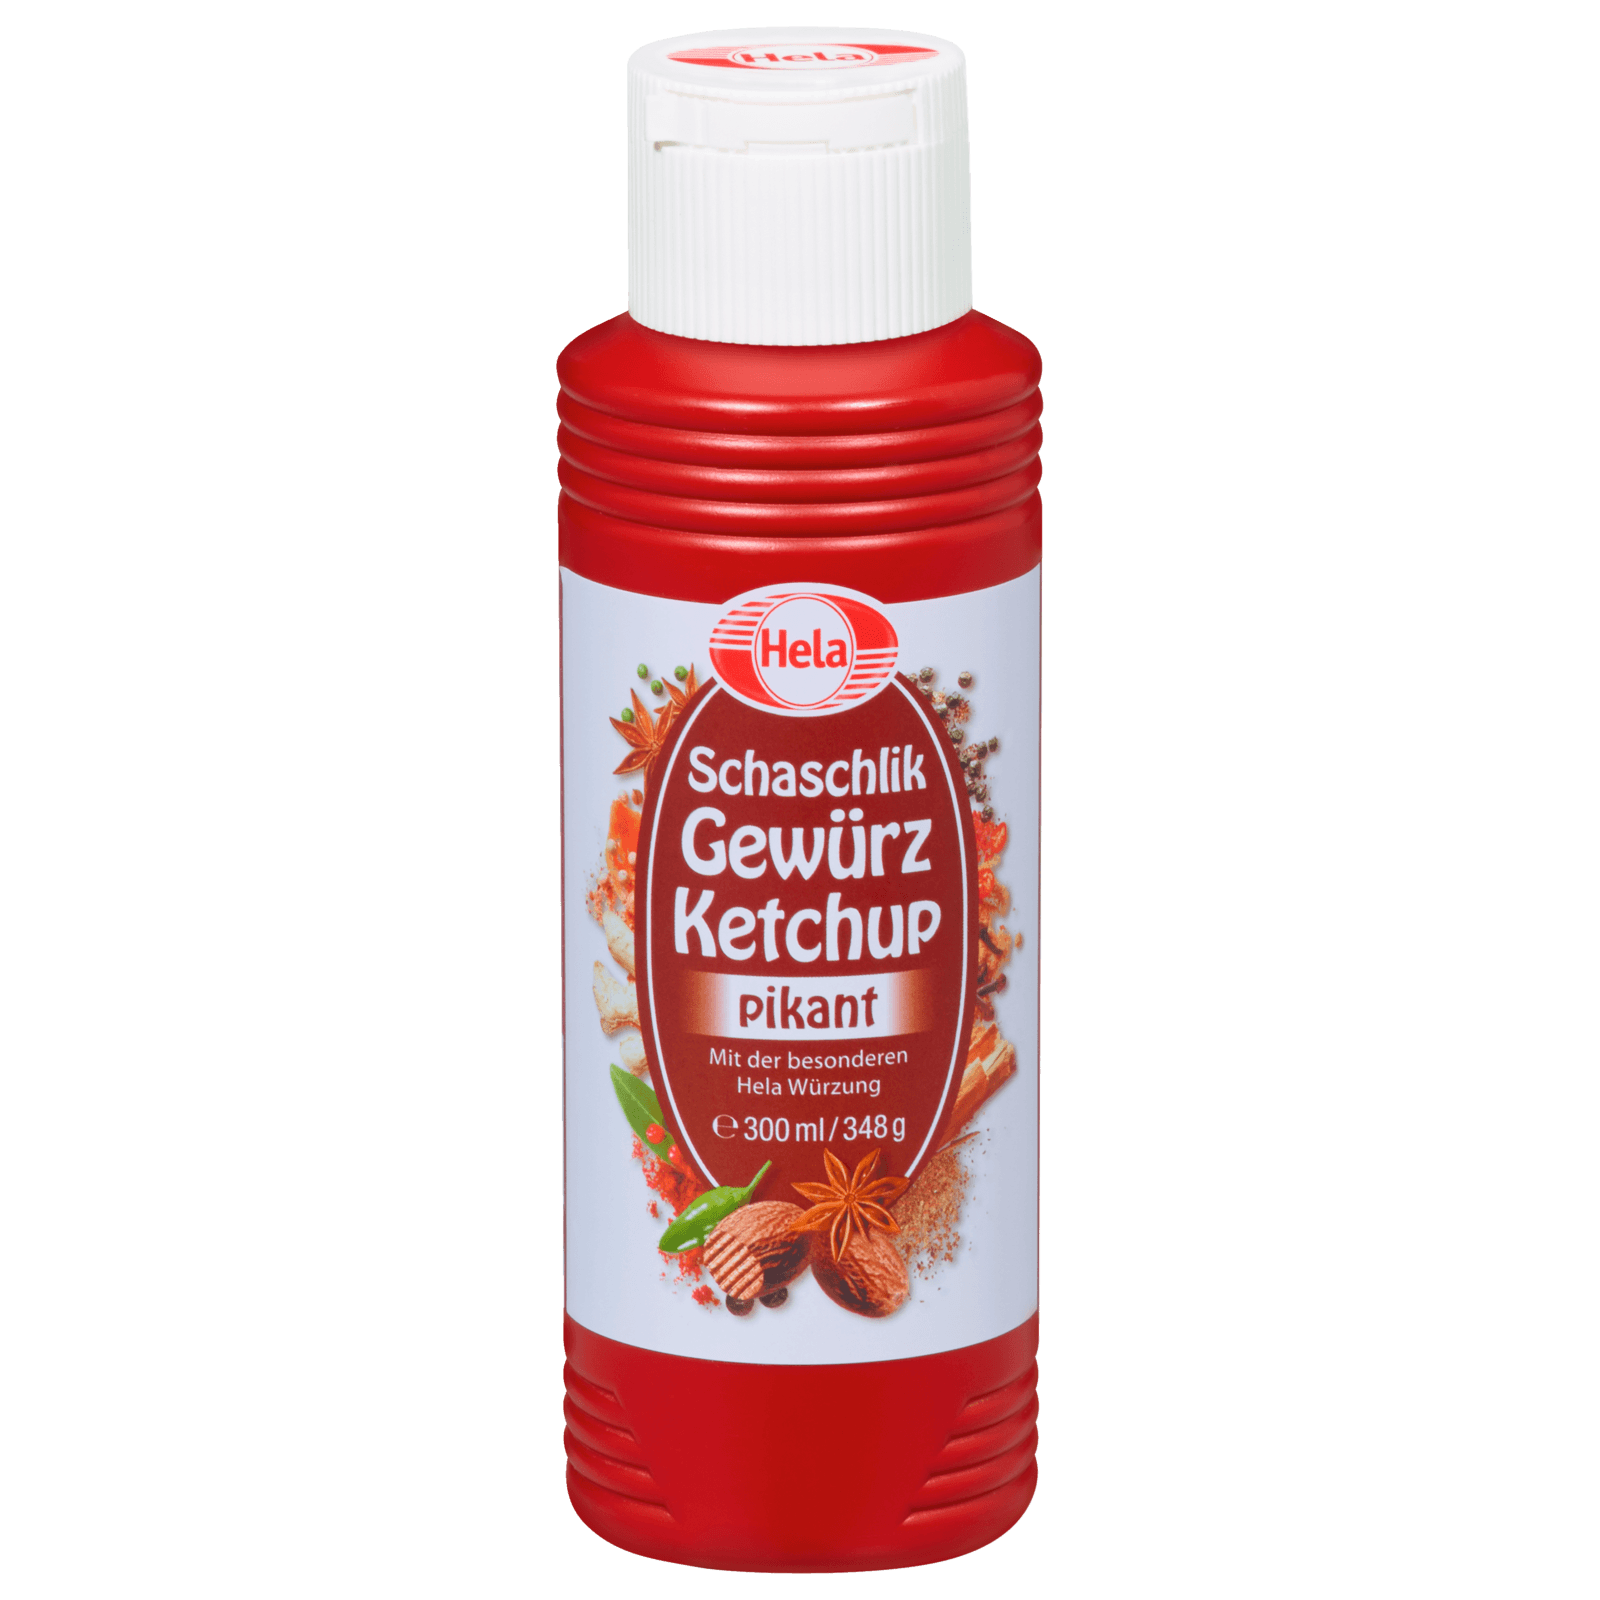 Hela Schaschlik Gewürz Ketchup pikant 300ml bei REWE online bestellen!